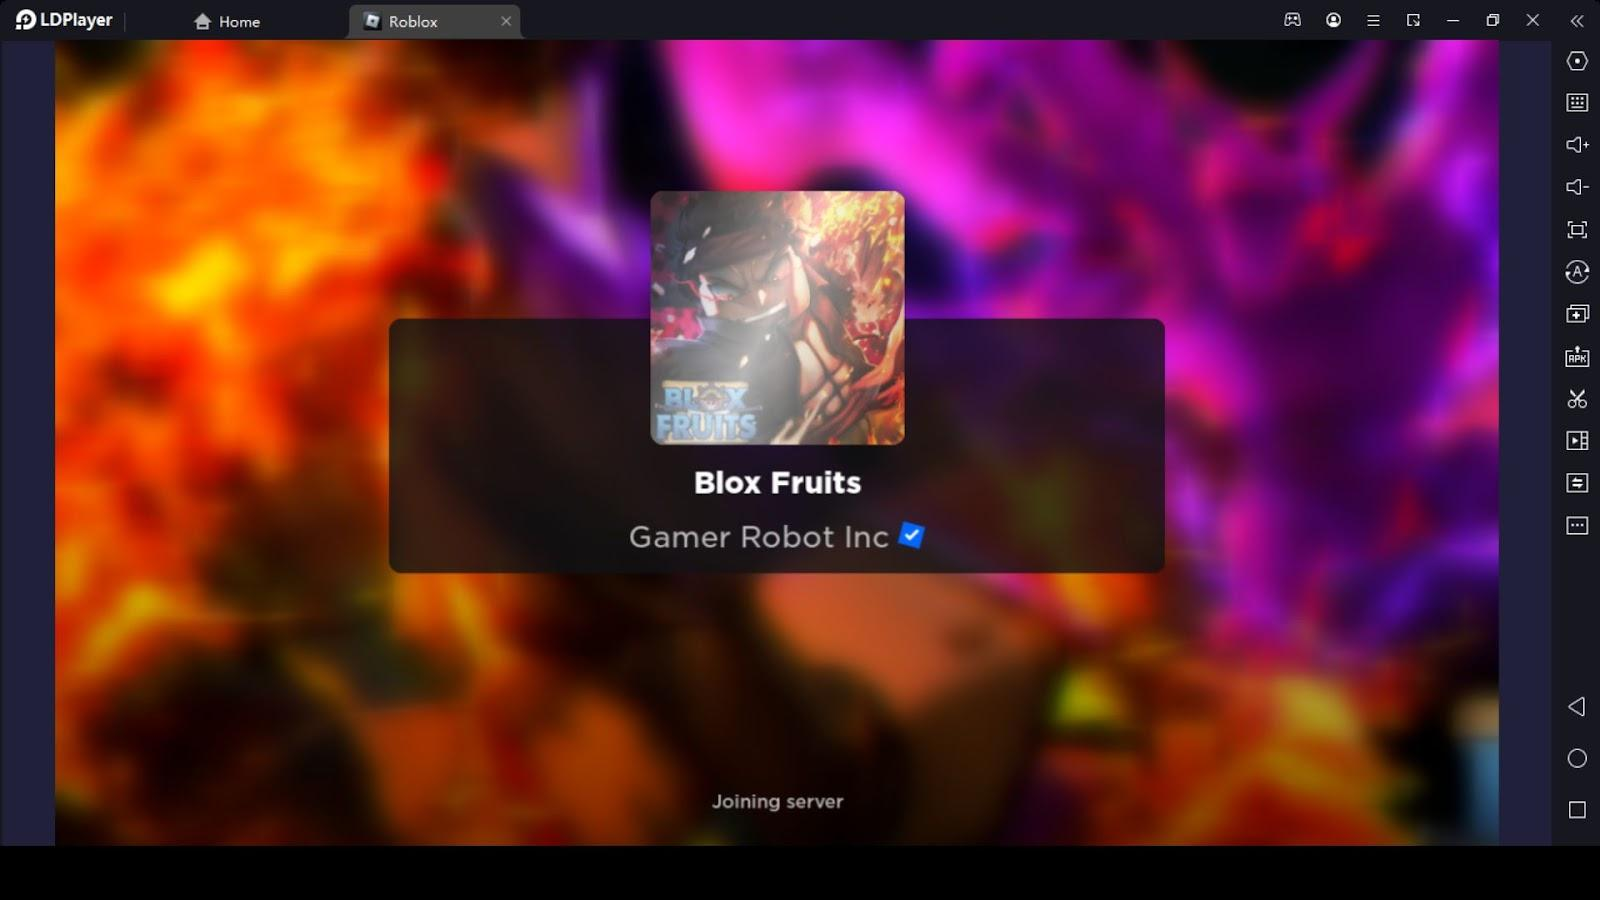 rip_indra (Raid Boss), Blox Fruits Wiki